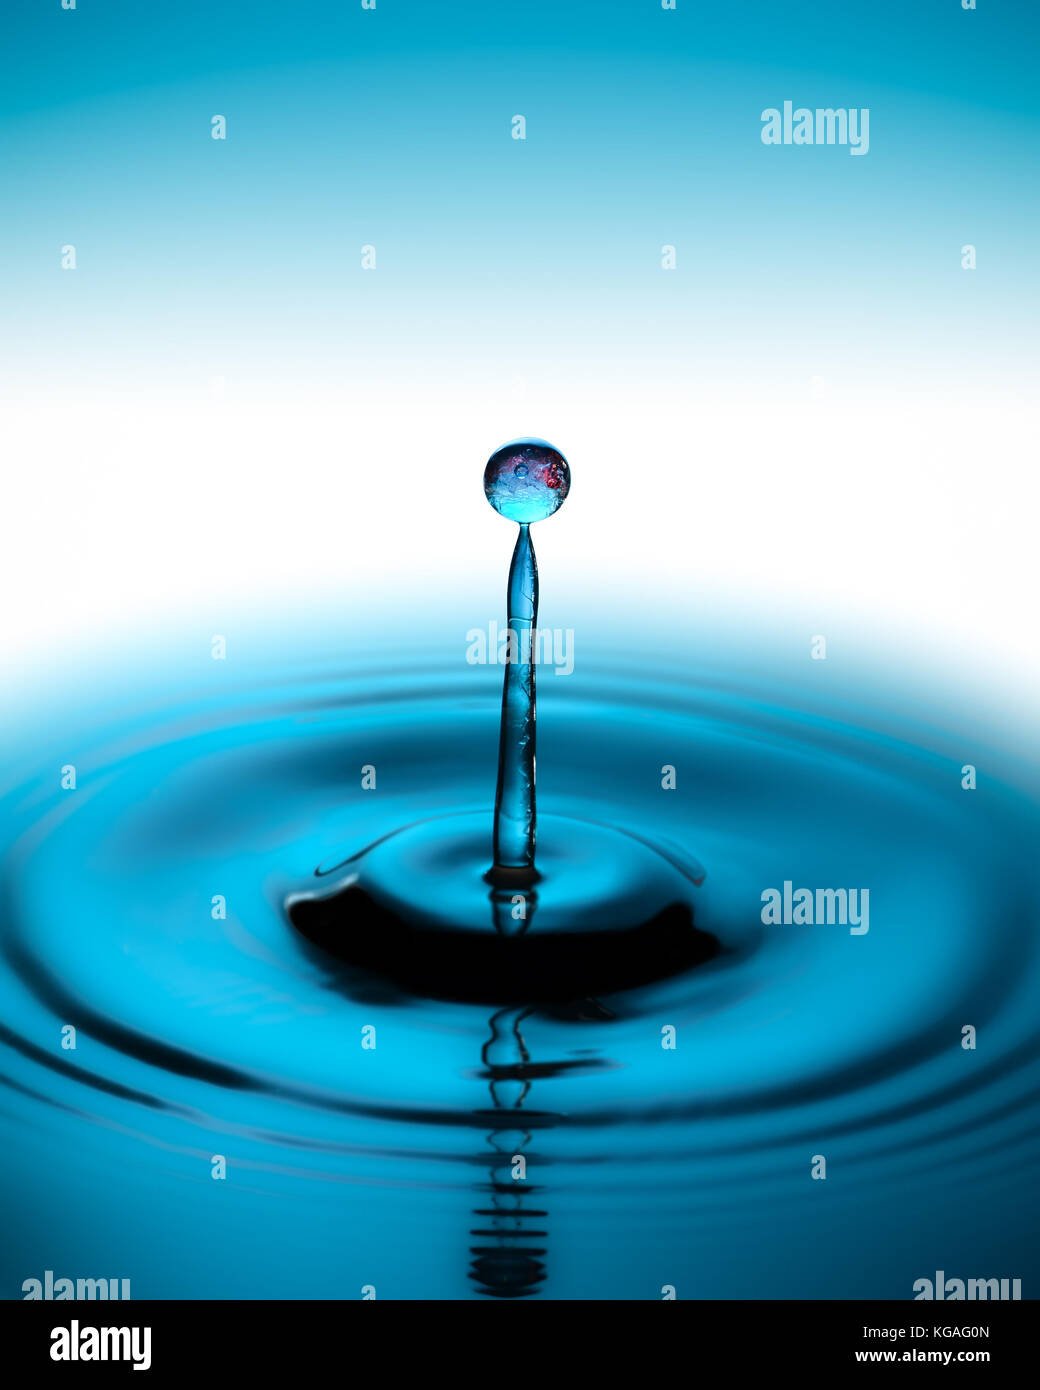 Colored water drop splash Stock Photo